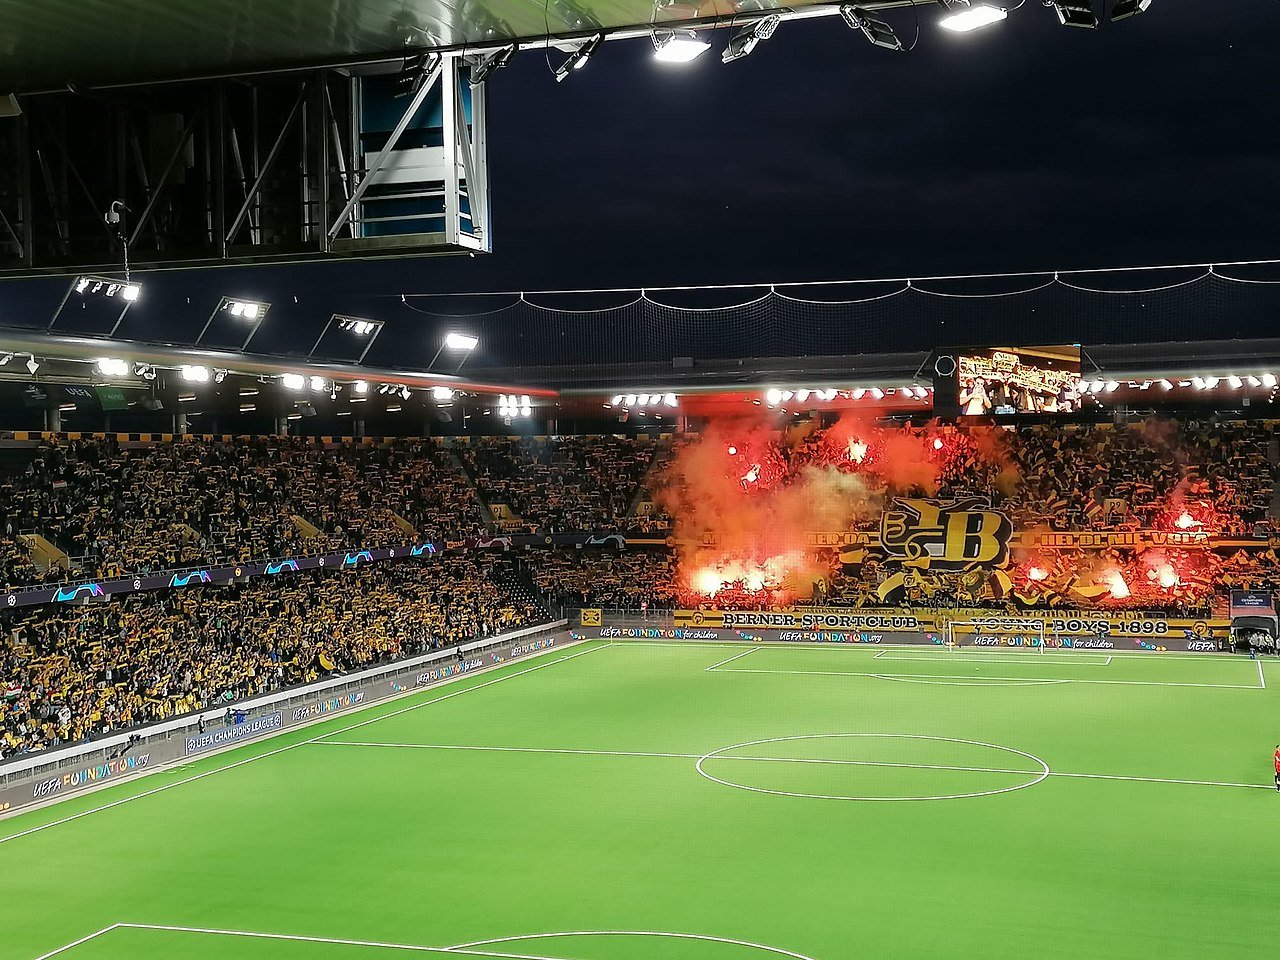 The_Wankdorf_Stadium_before_a_Champions_League_Match_(2021).jpg 나라별 축구 국대 홈구장들 - UEFA 2편